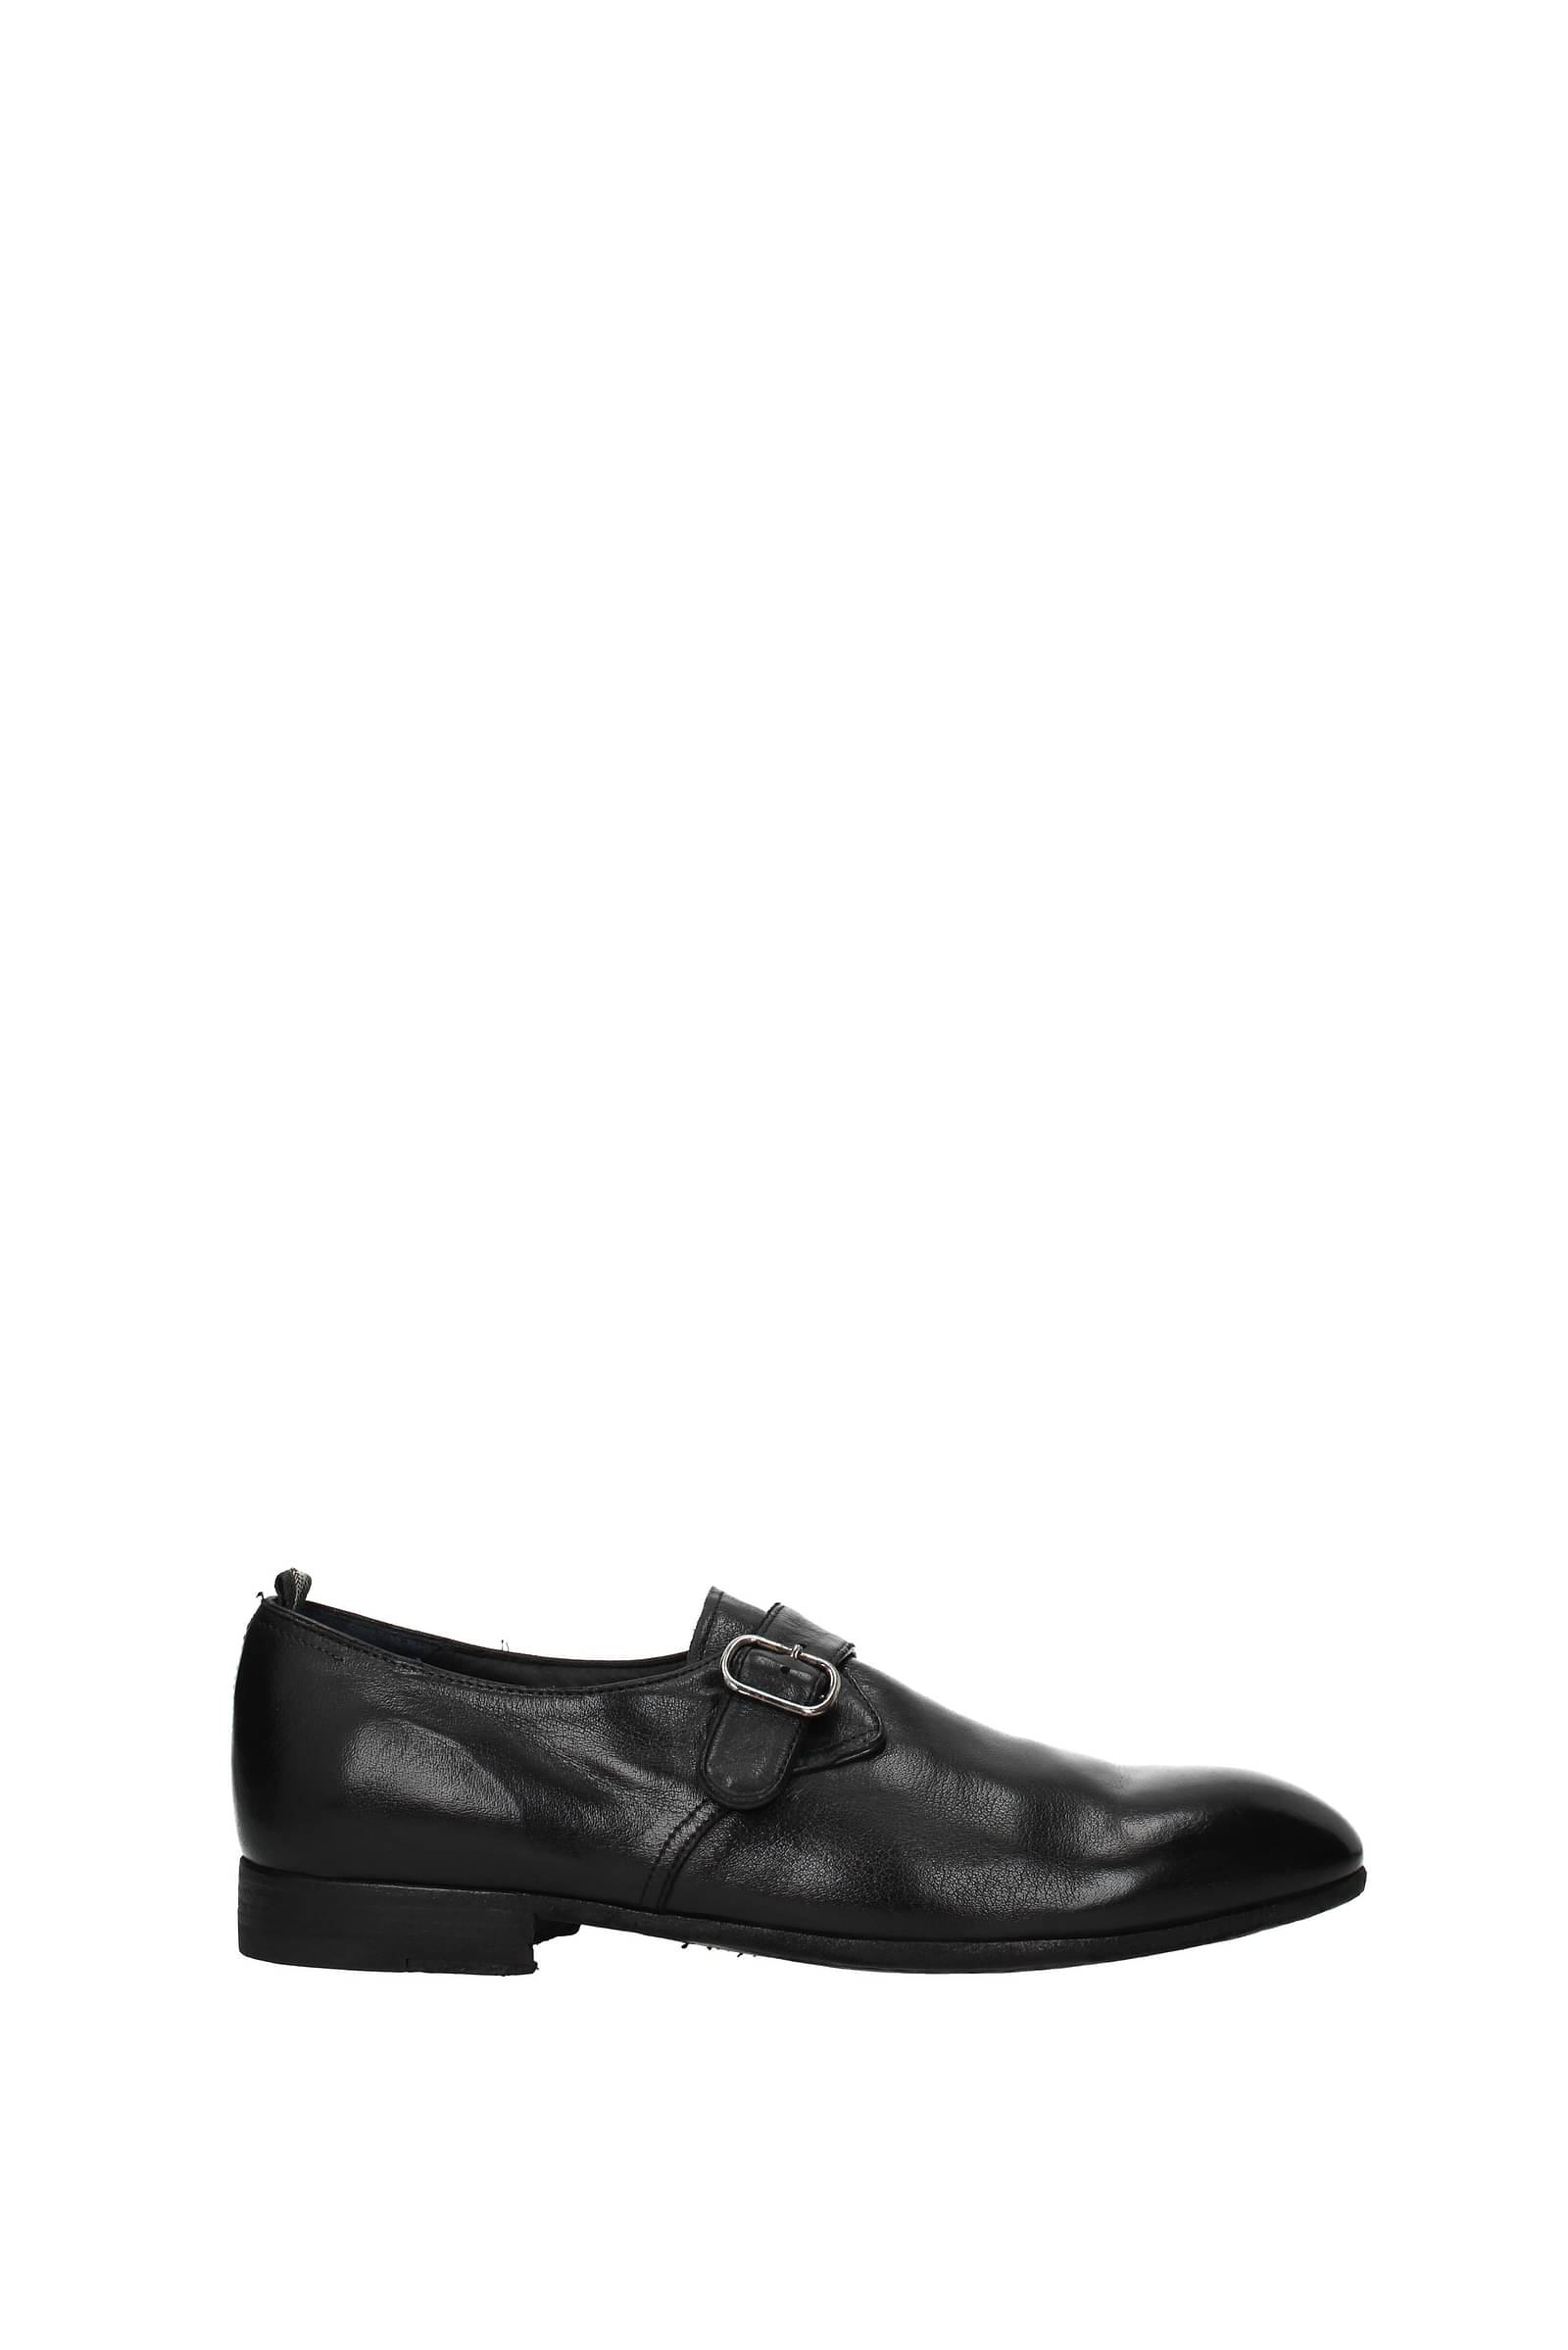 Officine Creative Leder Leder schnürschuhe in Schwarz für Herren Herren Schuhe Schnürschuhe Derby Schuhe 